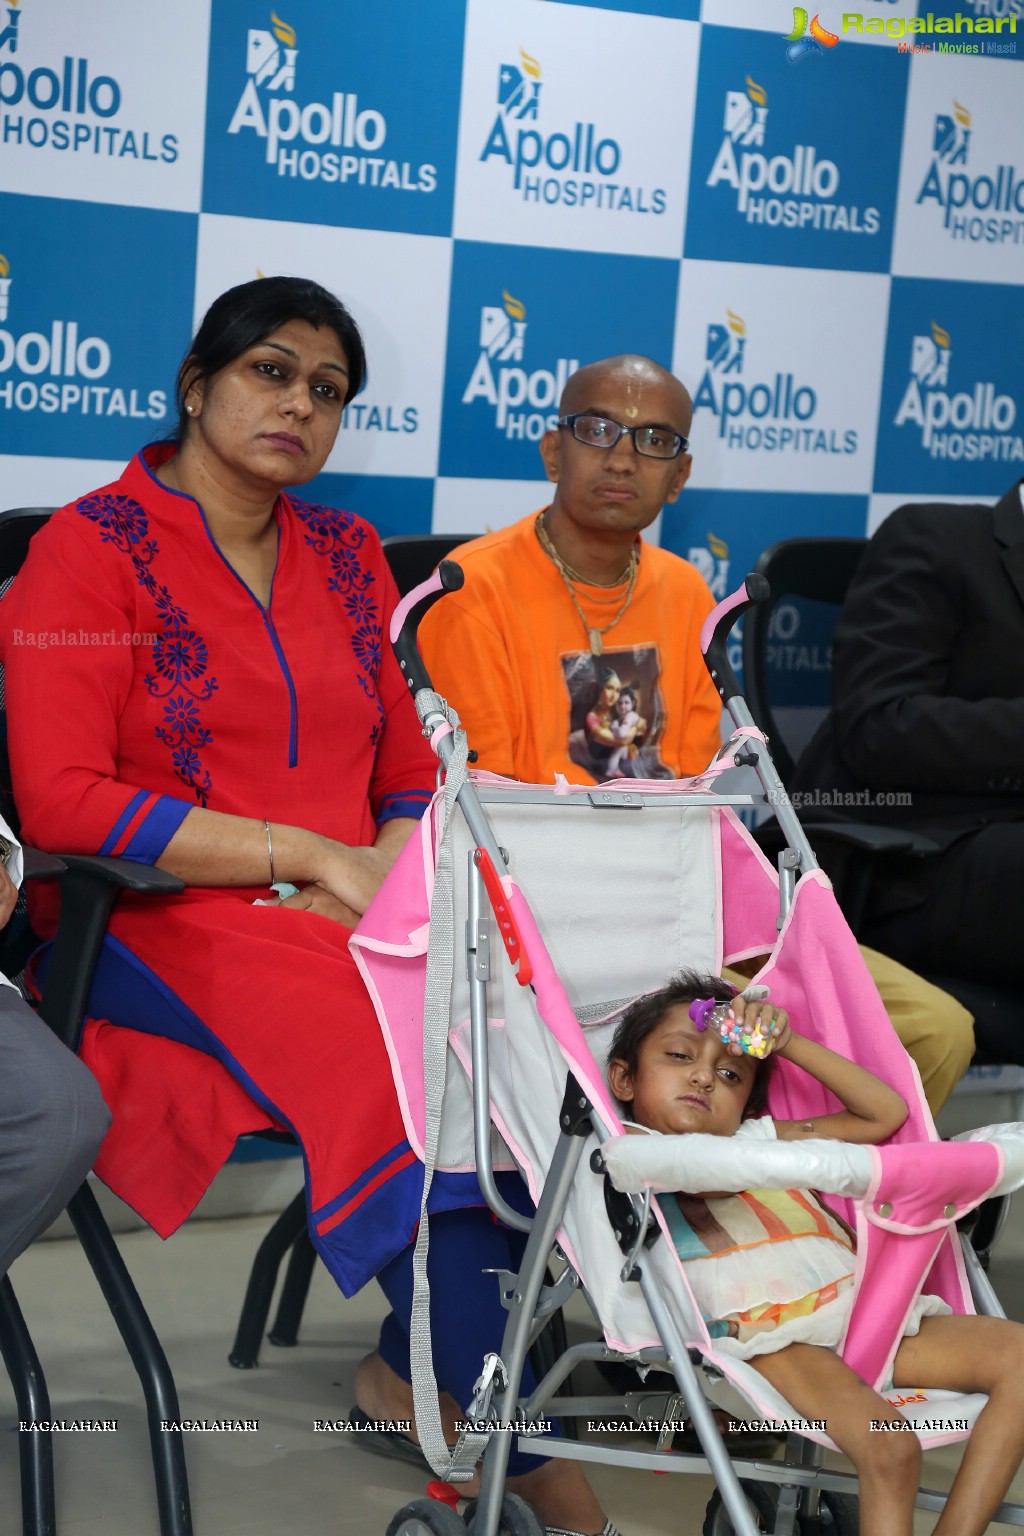 Apollo Hospitals Press Meet at Apollo Hospitals, Jubilee Hills, Hyderabad